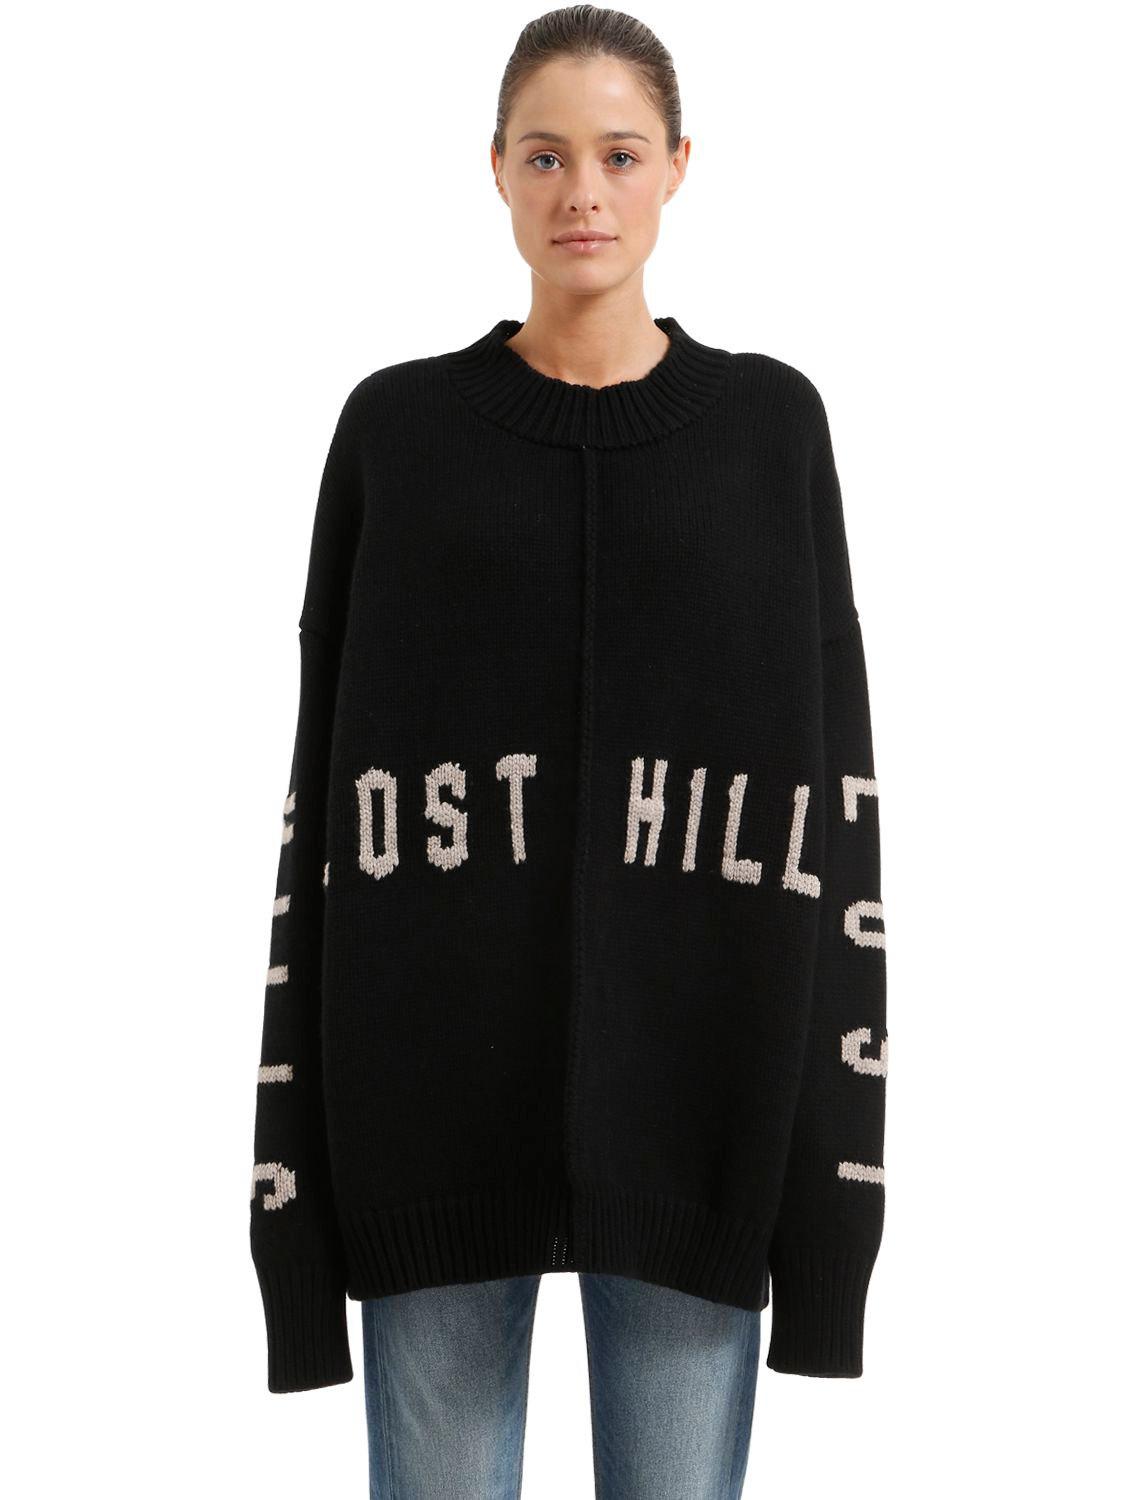 Yeezy Lost Hills Intarsia Wool Sweater in Black/White (Black) - Lyst